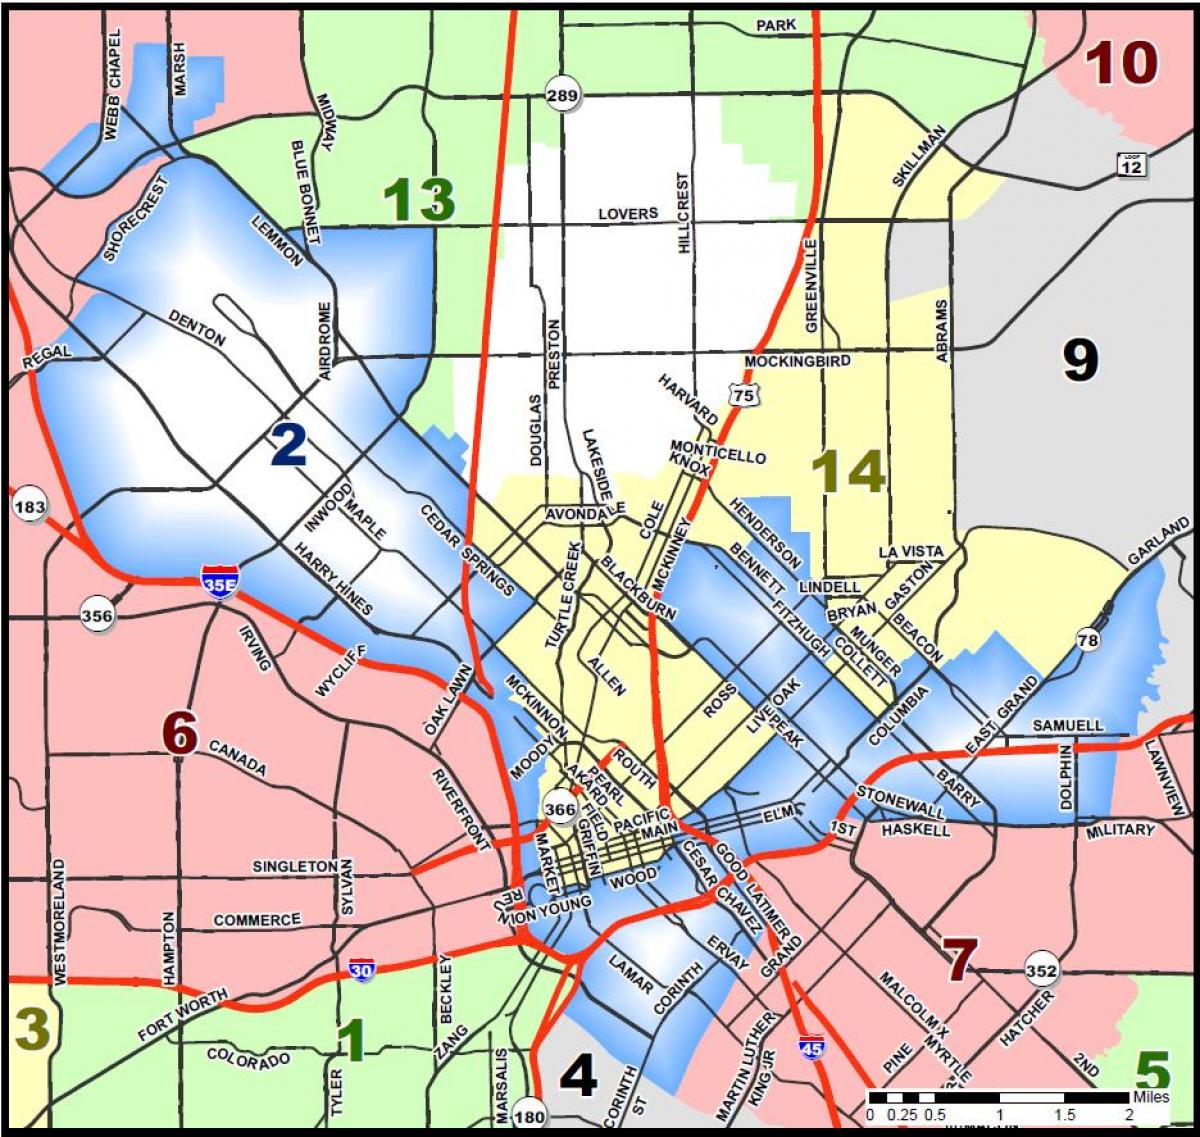 Dallas ajuntament de districte mapa